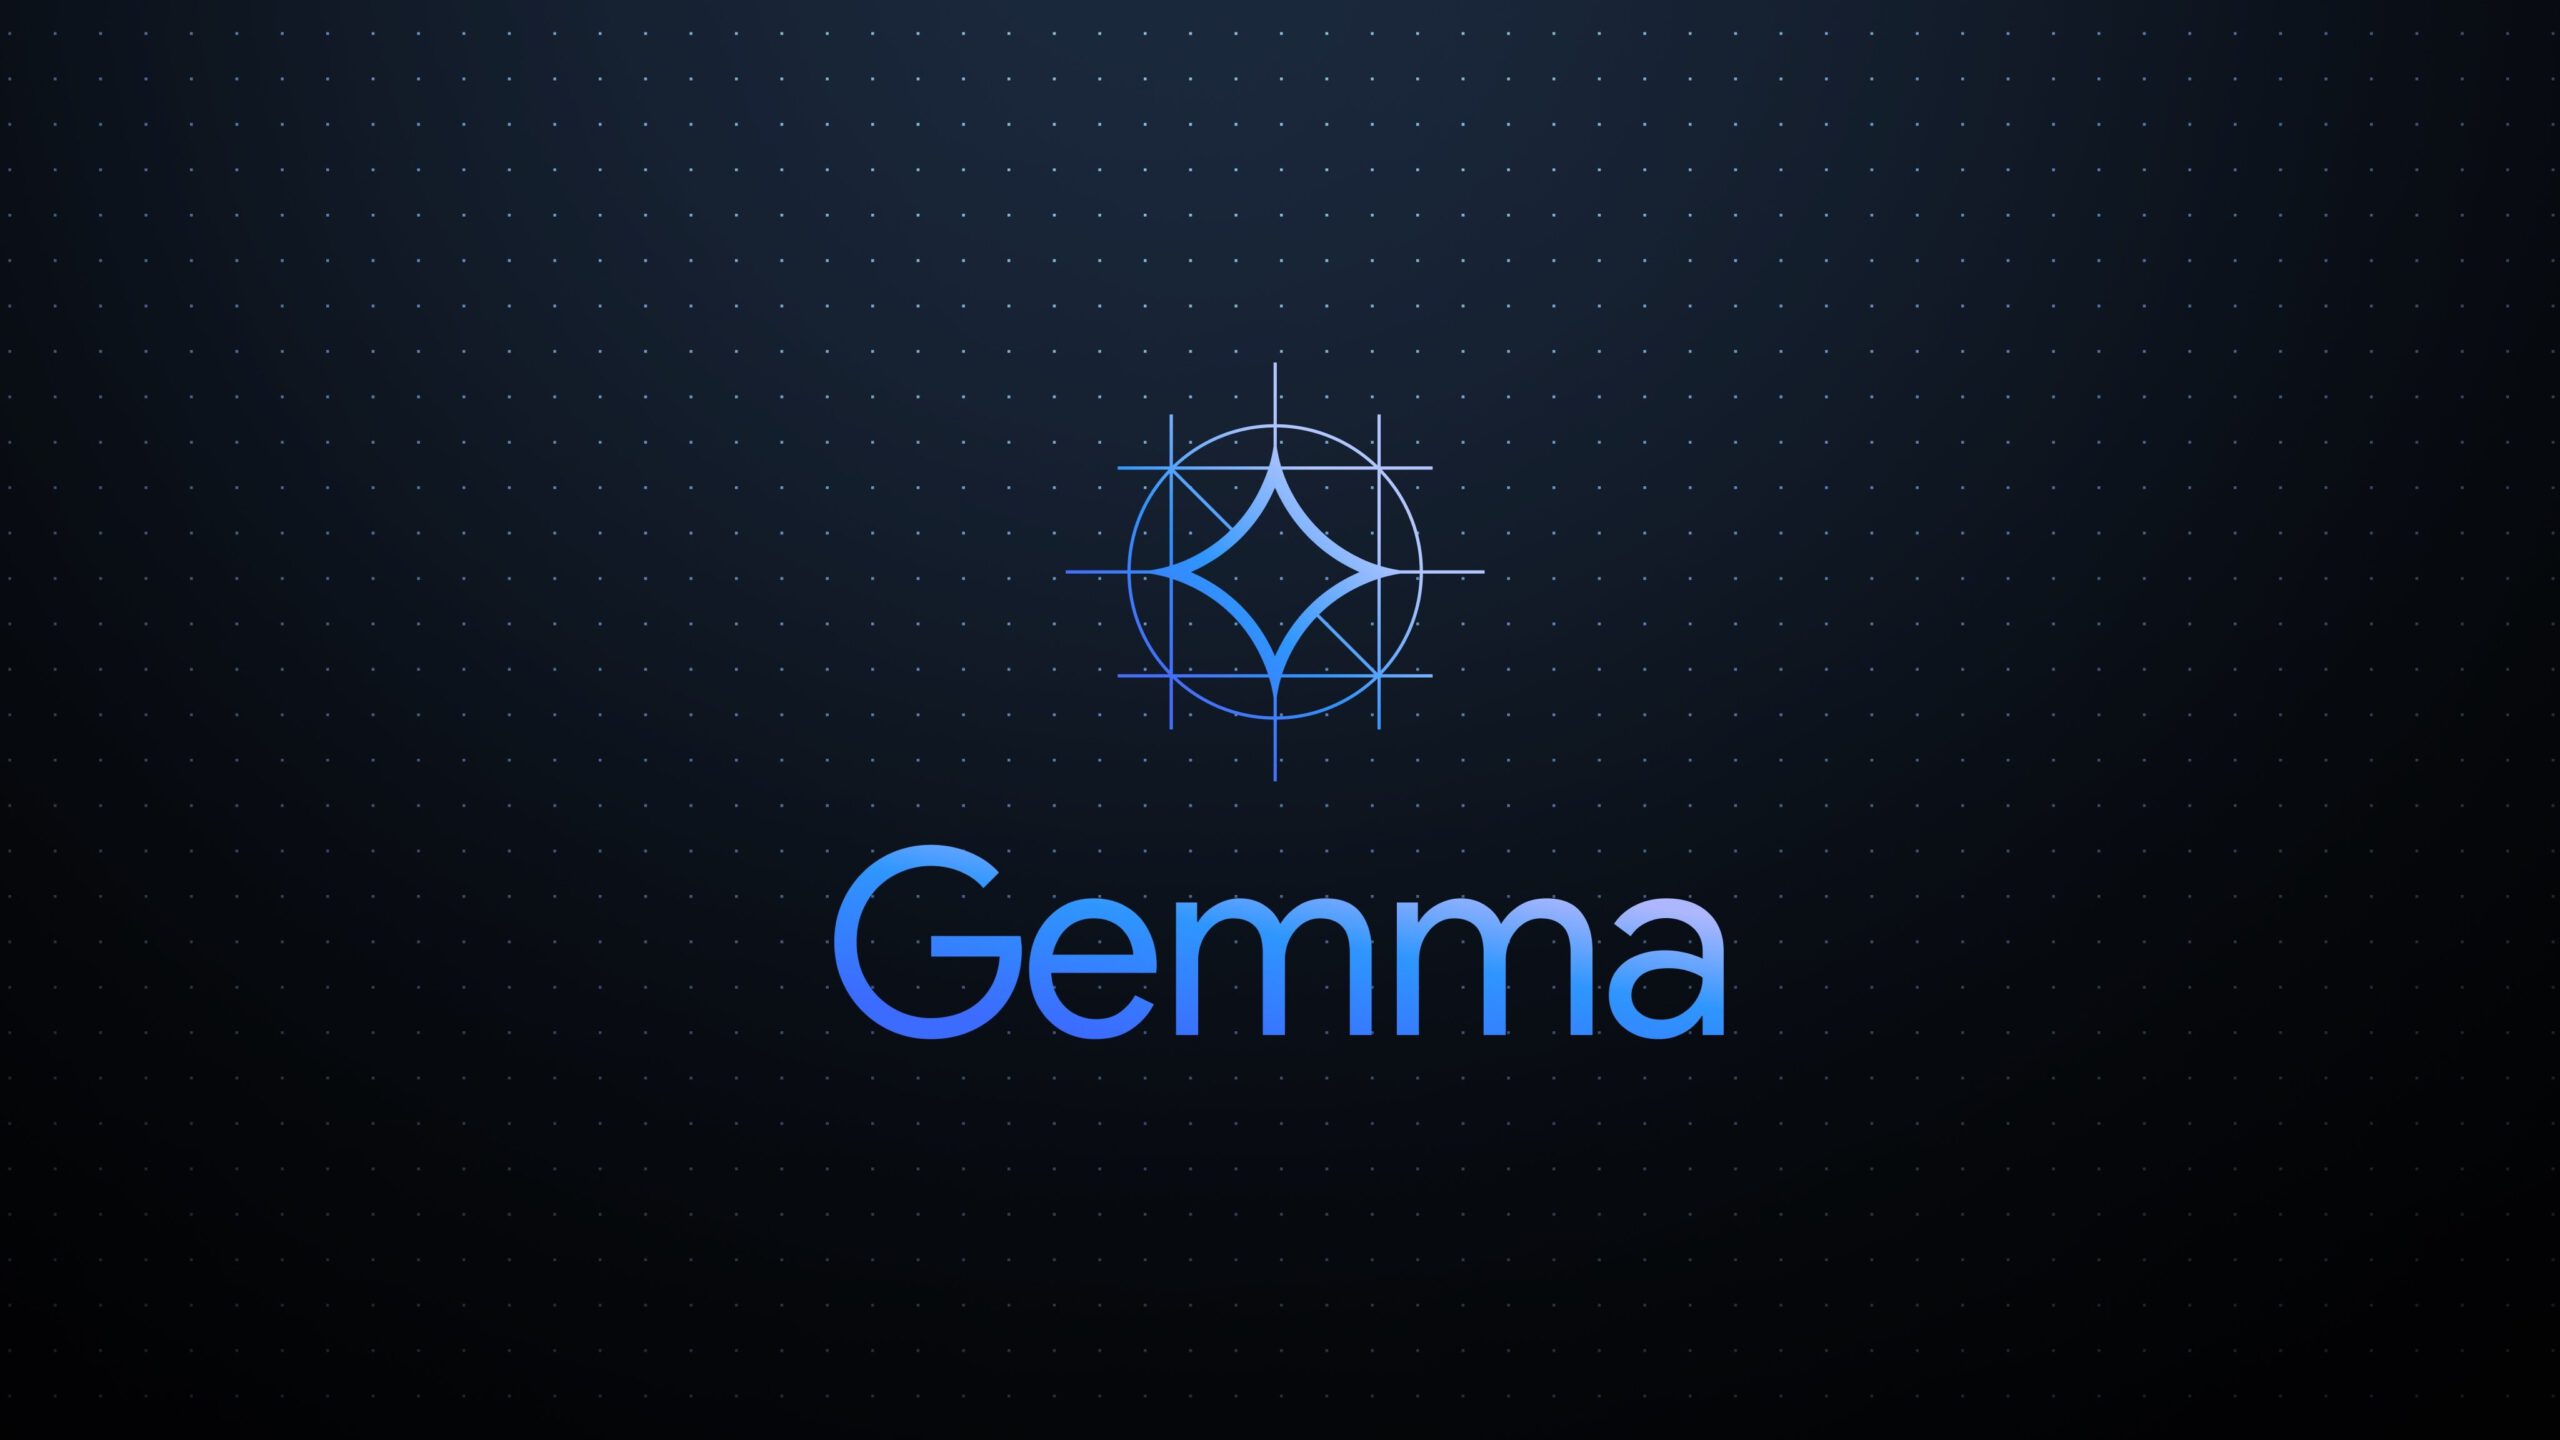 Blue Google Gemma logo against a dark background